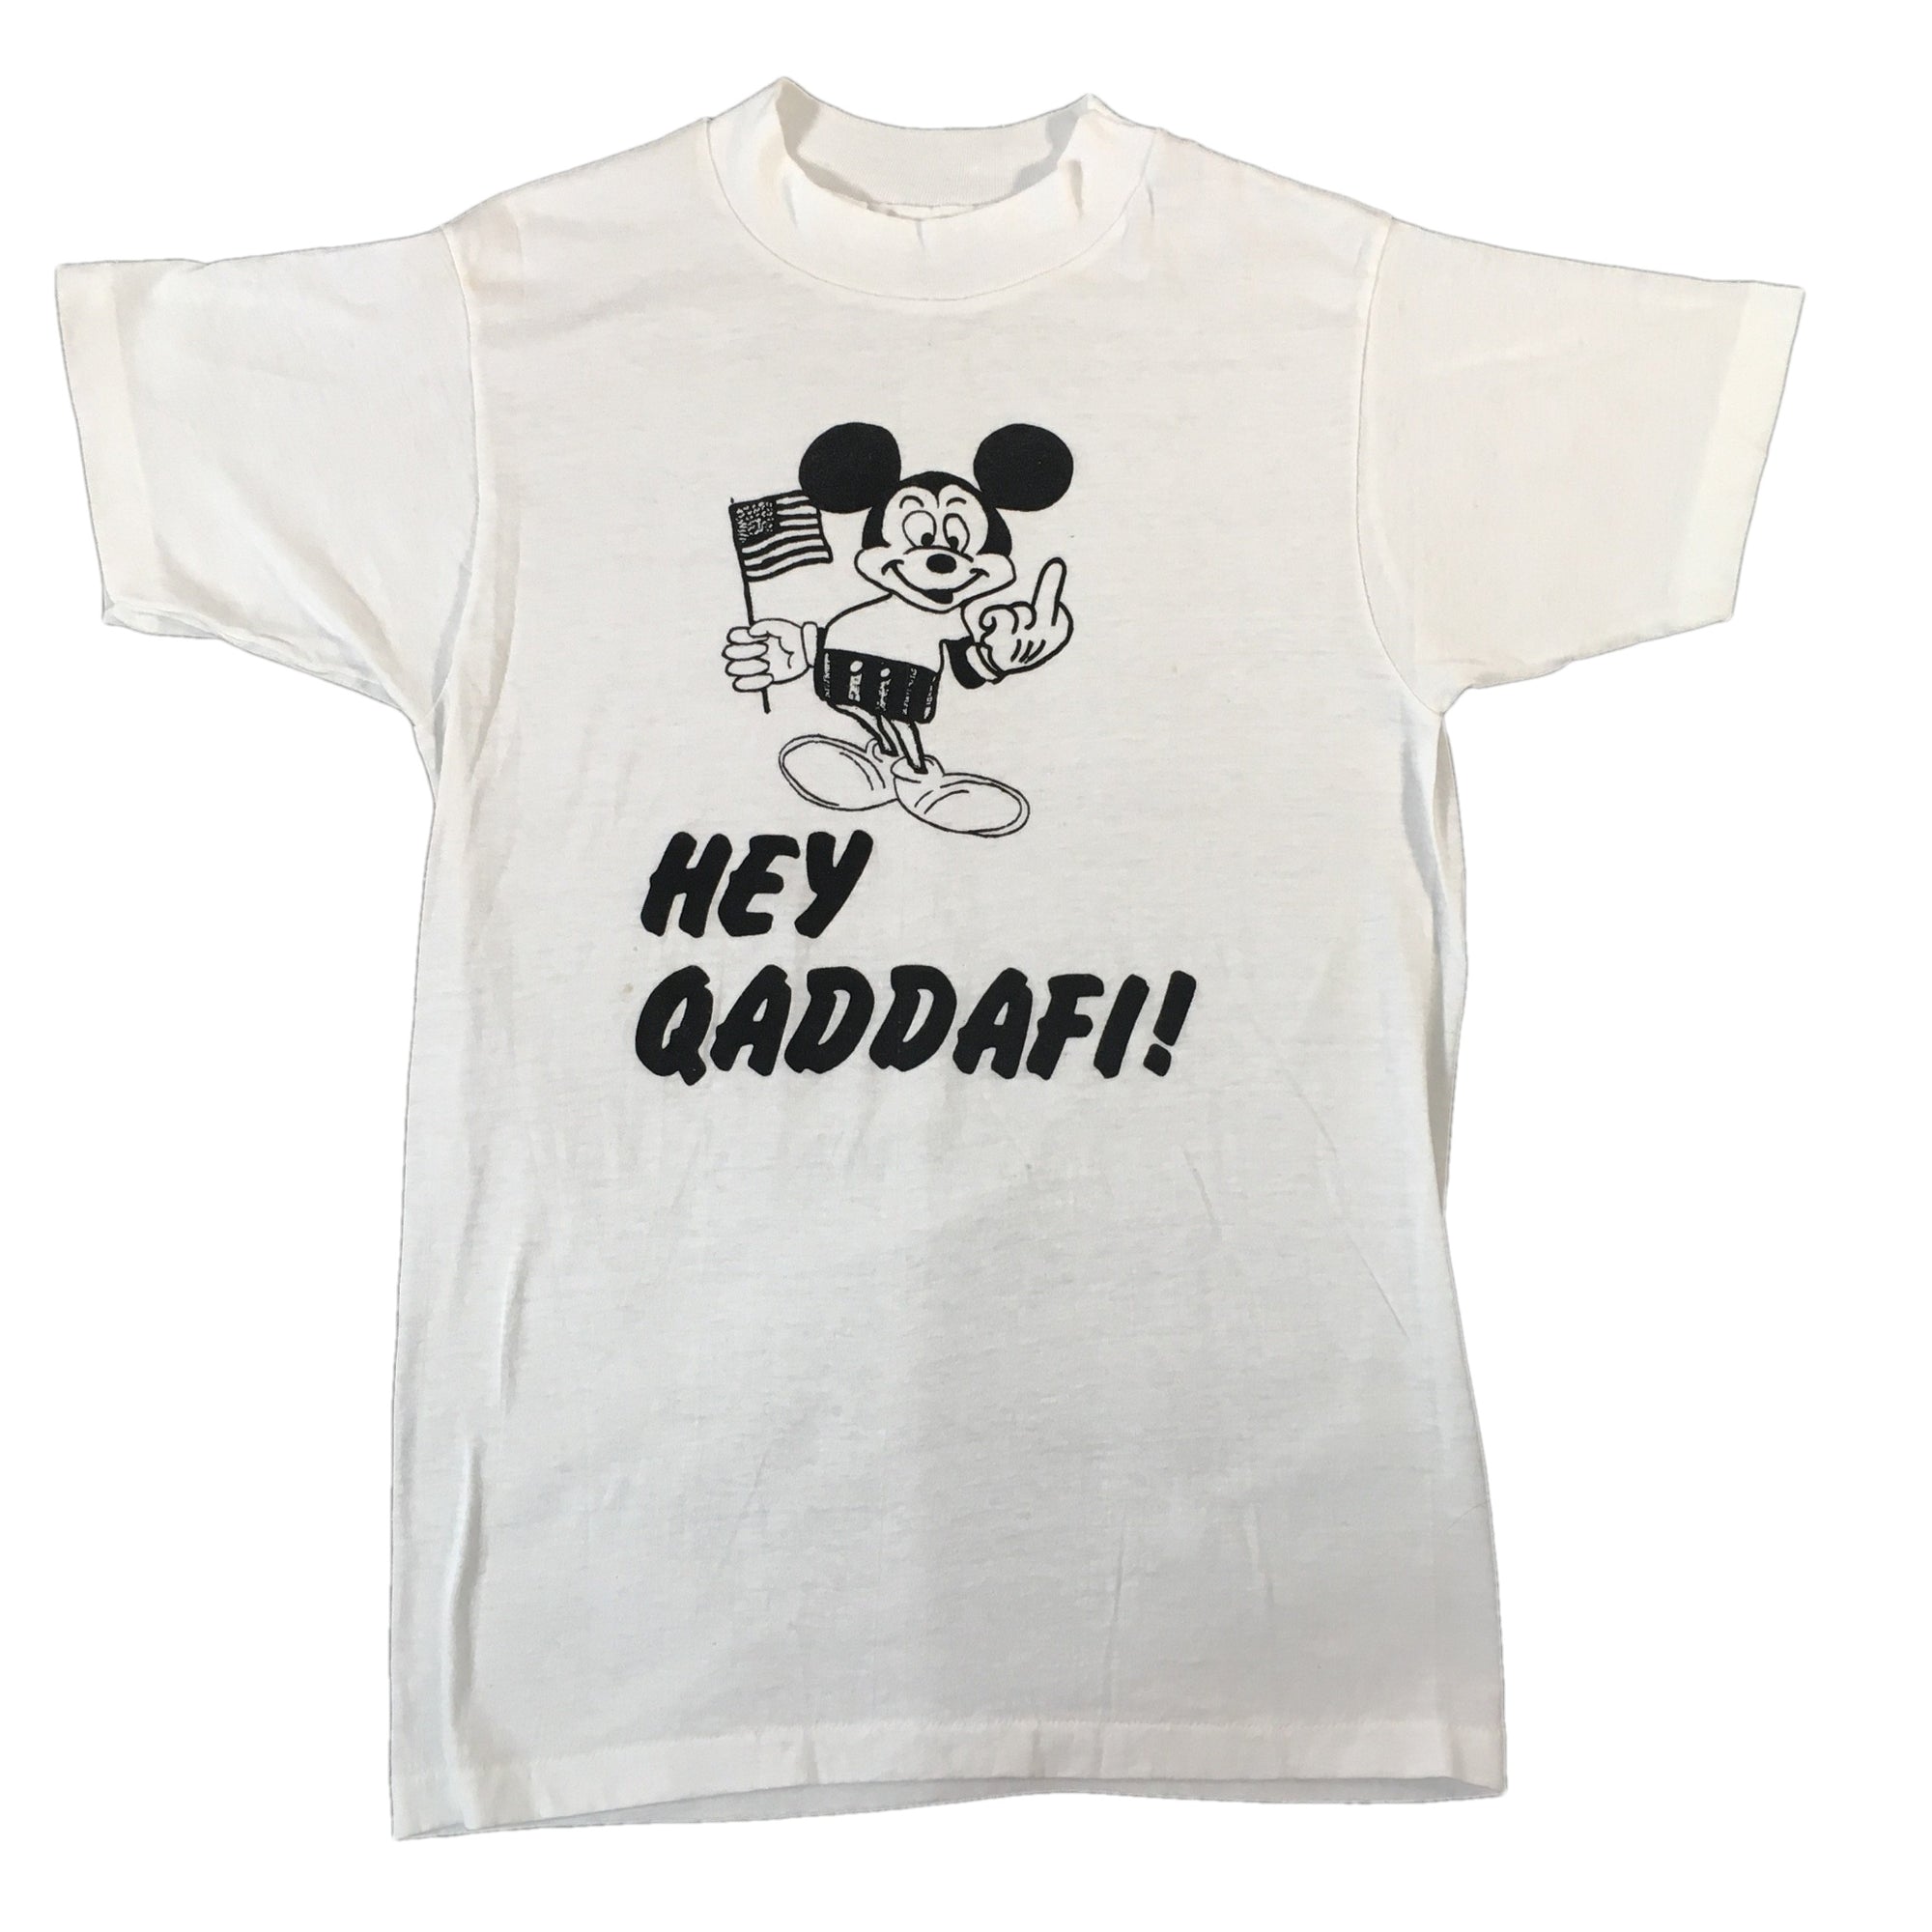 Vintage Mickey Mouse "Hey Qaddafi" T-Shirt - jointcustodydc